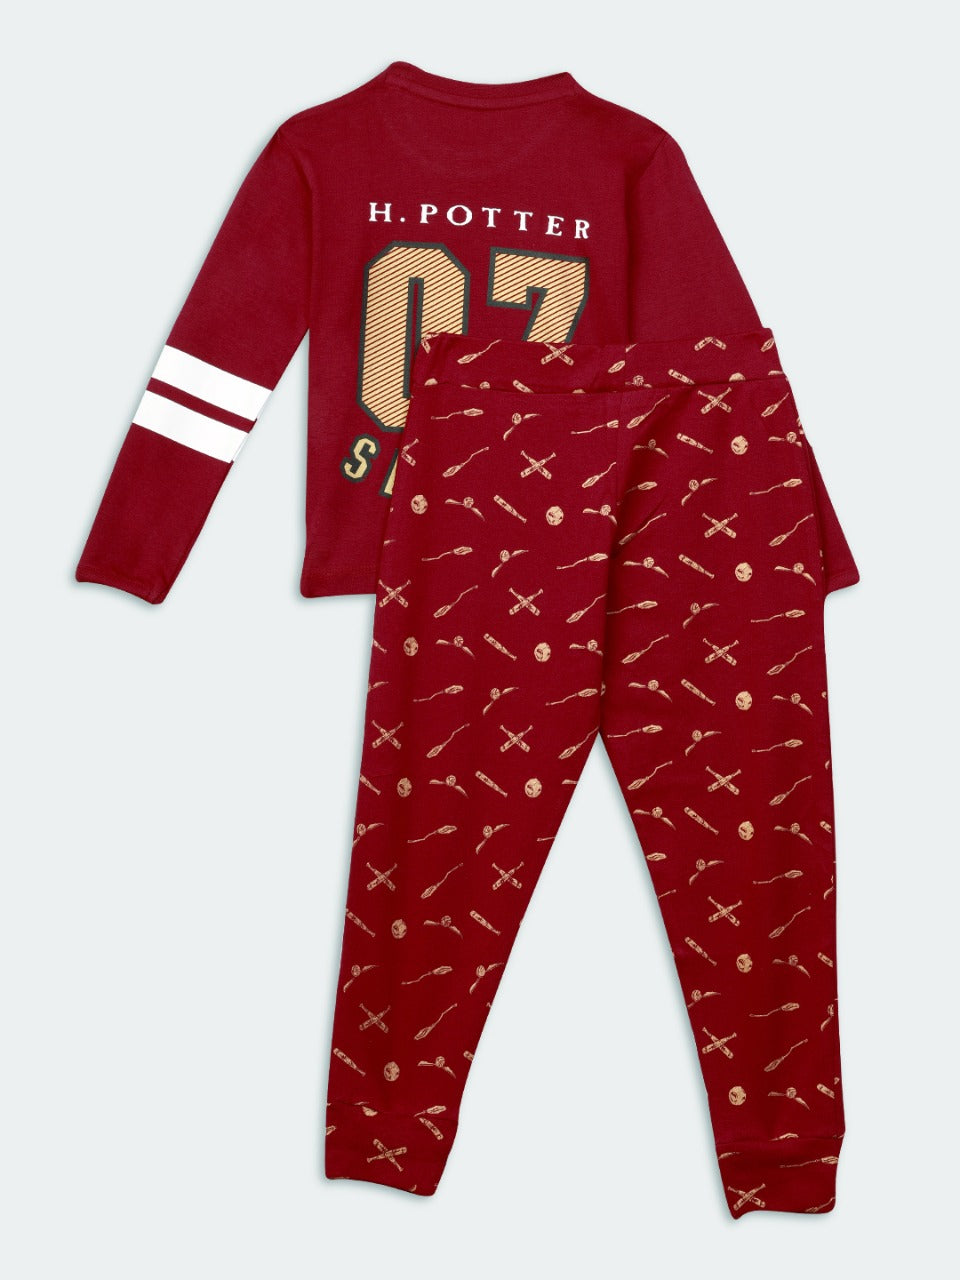 Harry Potter™ Quidditch kit PJ Set for Family